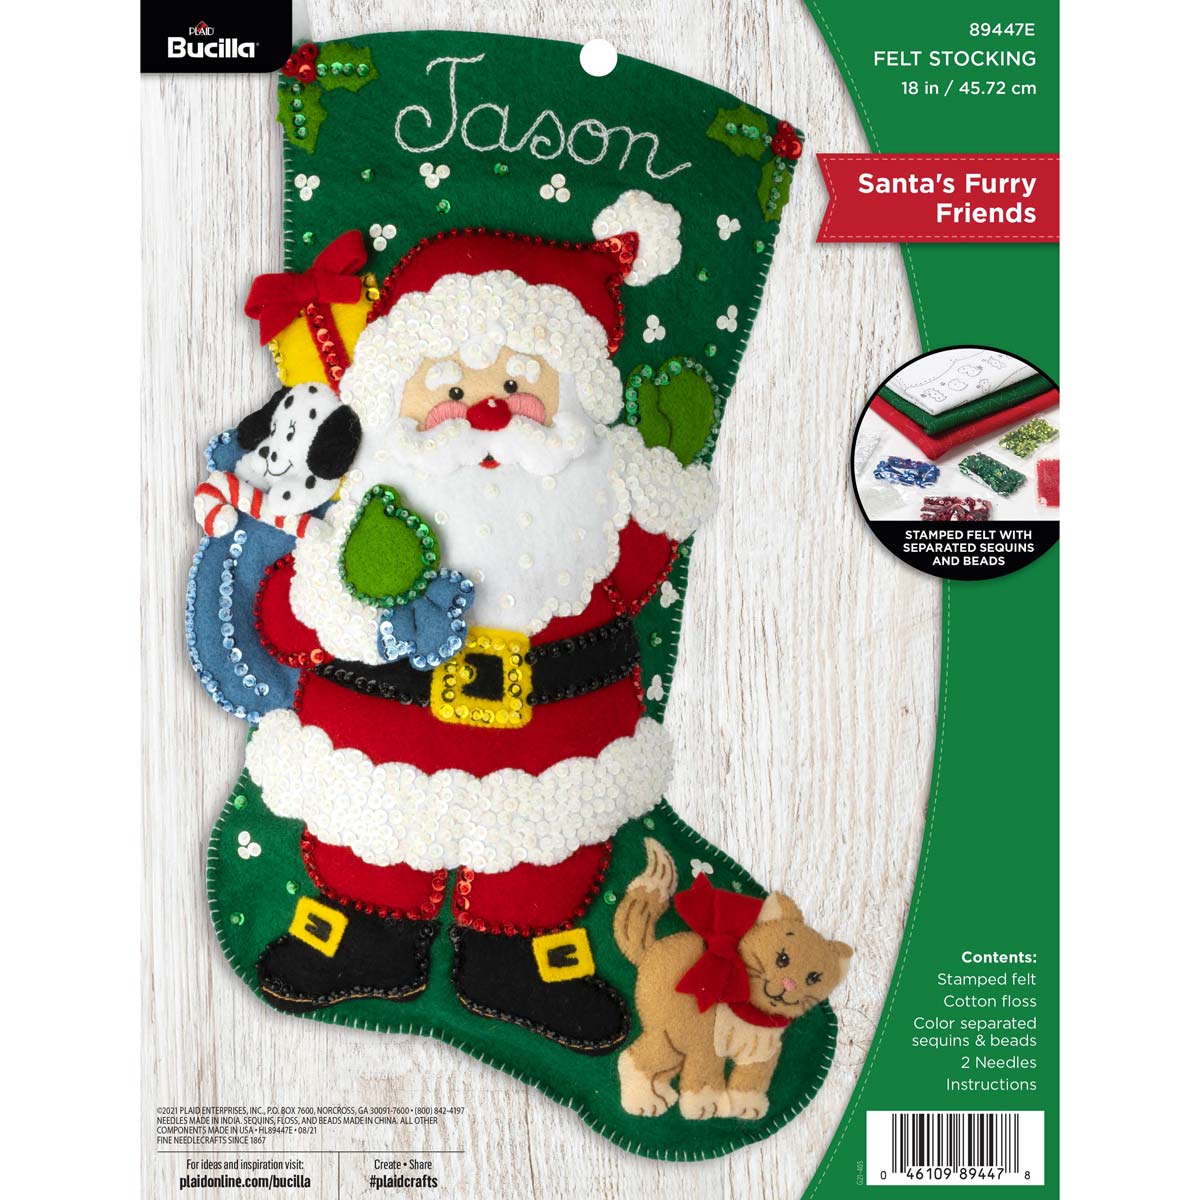  Bucilla Hugs, Felt Applique Christmas Stocking Kit, 18  (89253E)